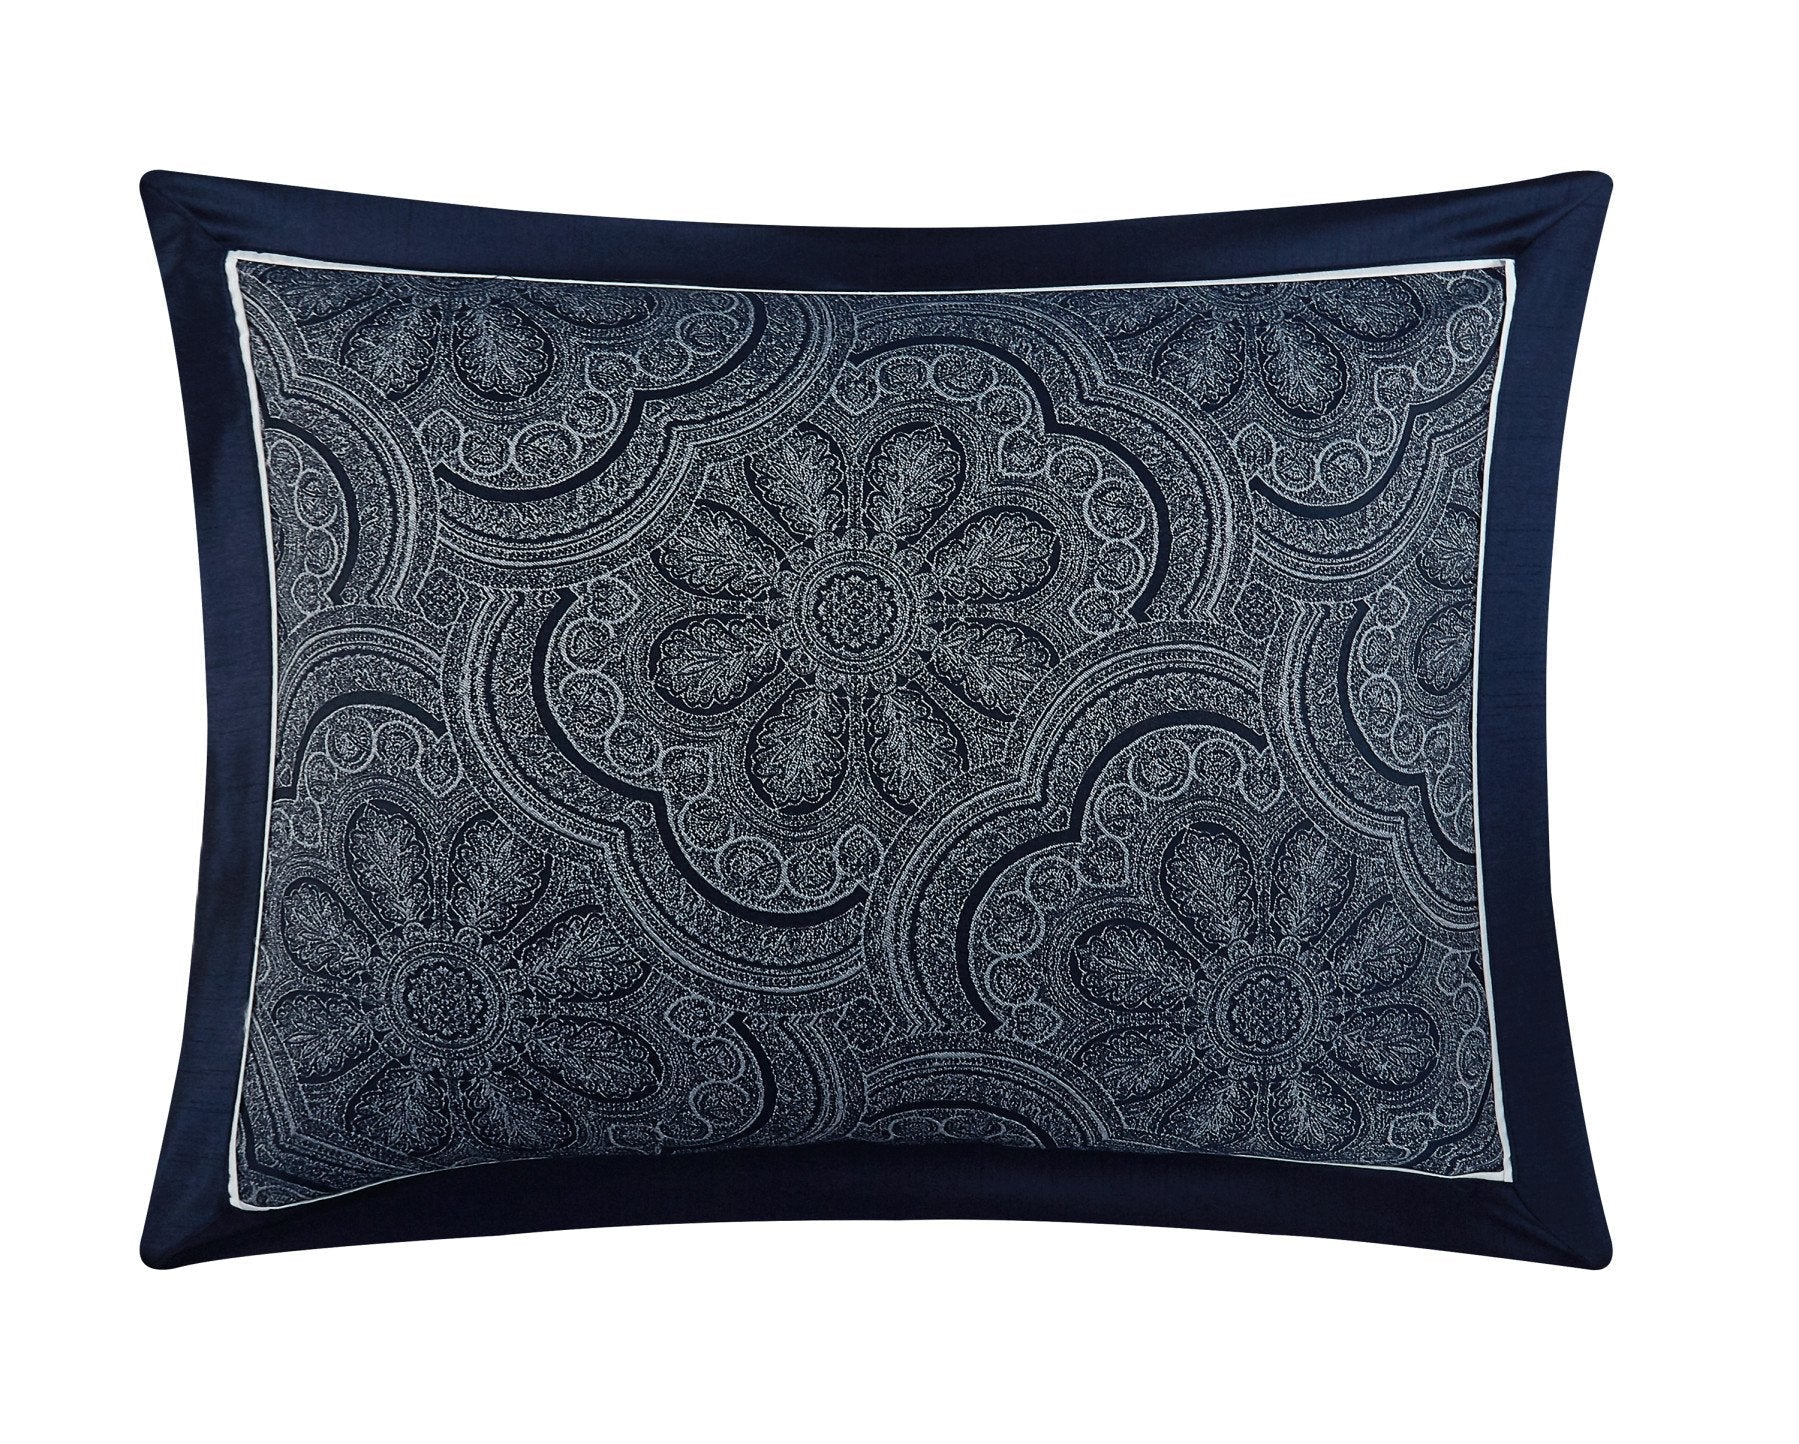 Meryl 9 Piece Jacquard Comforter Set